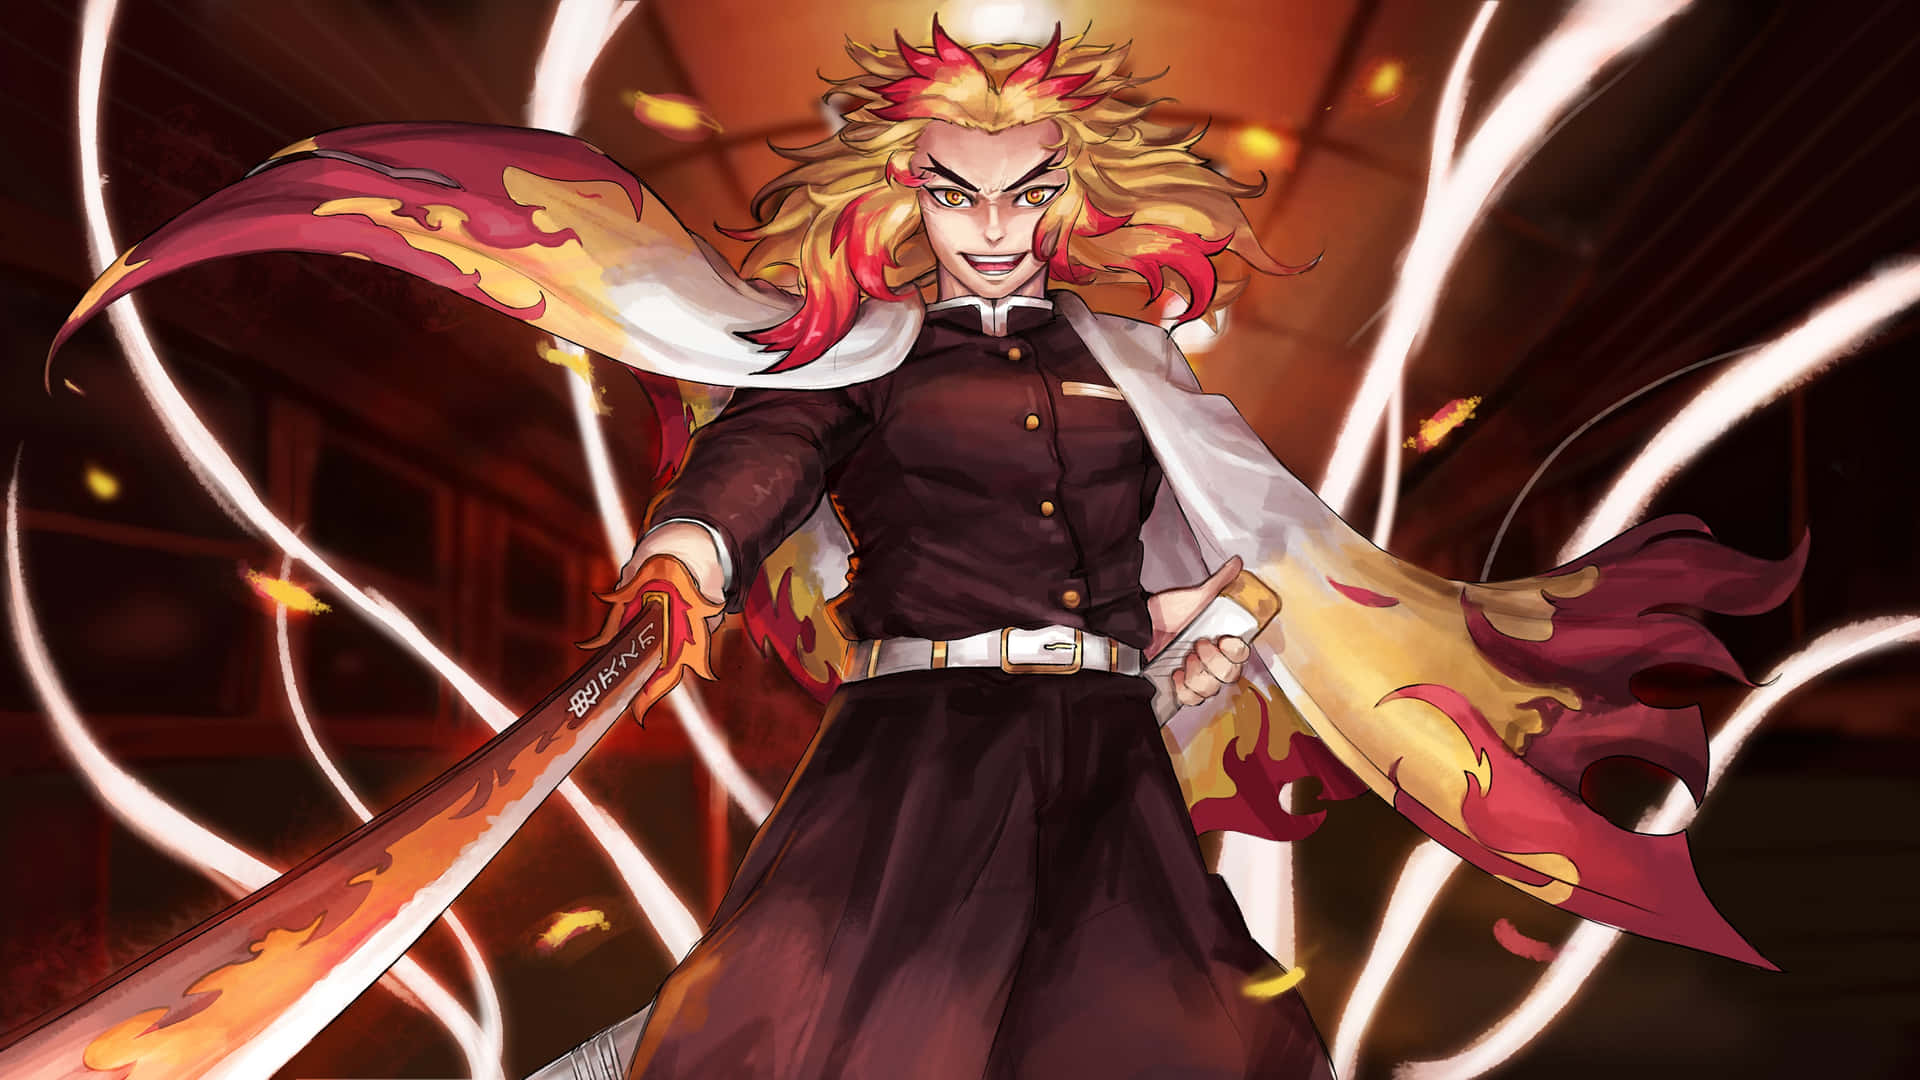 Flaming Sword Demon Slayer Character Wallpaper